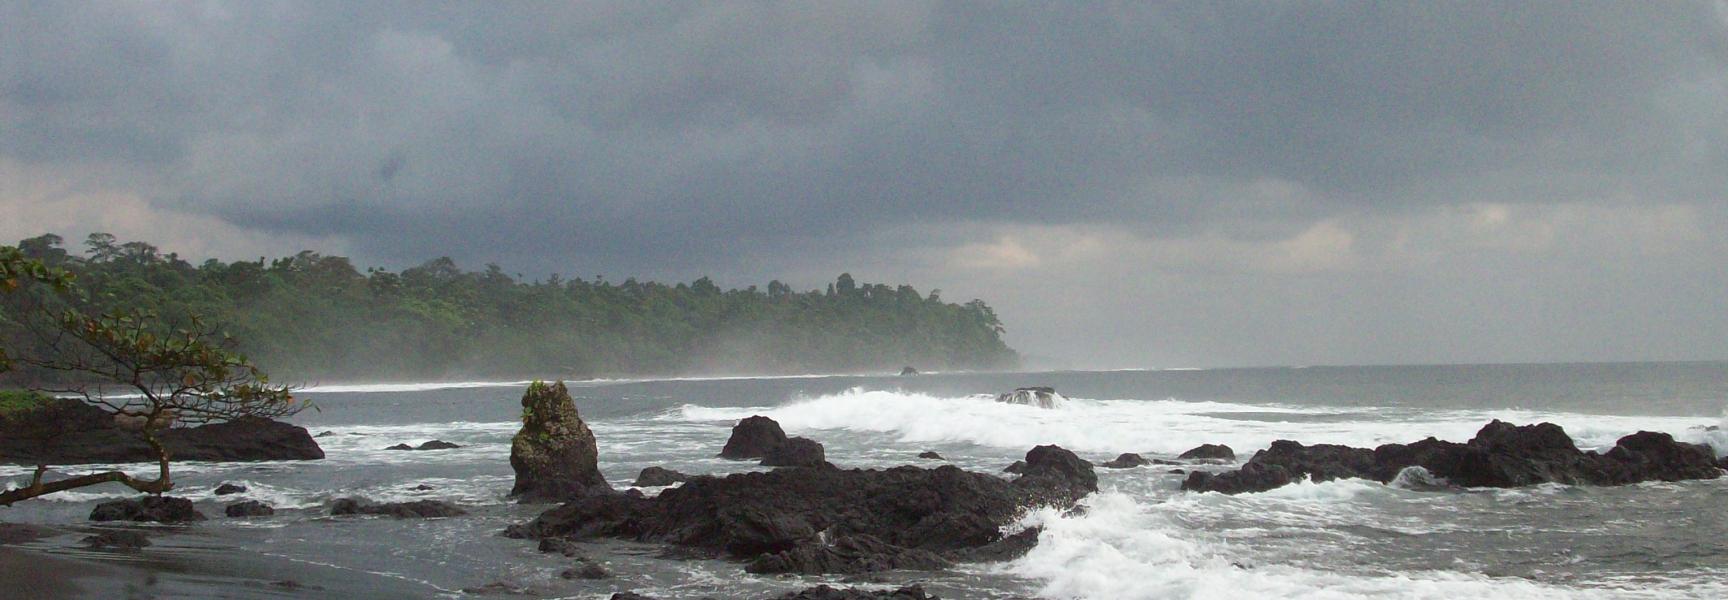 Sea view in Equatorial Guinea